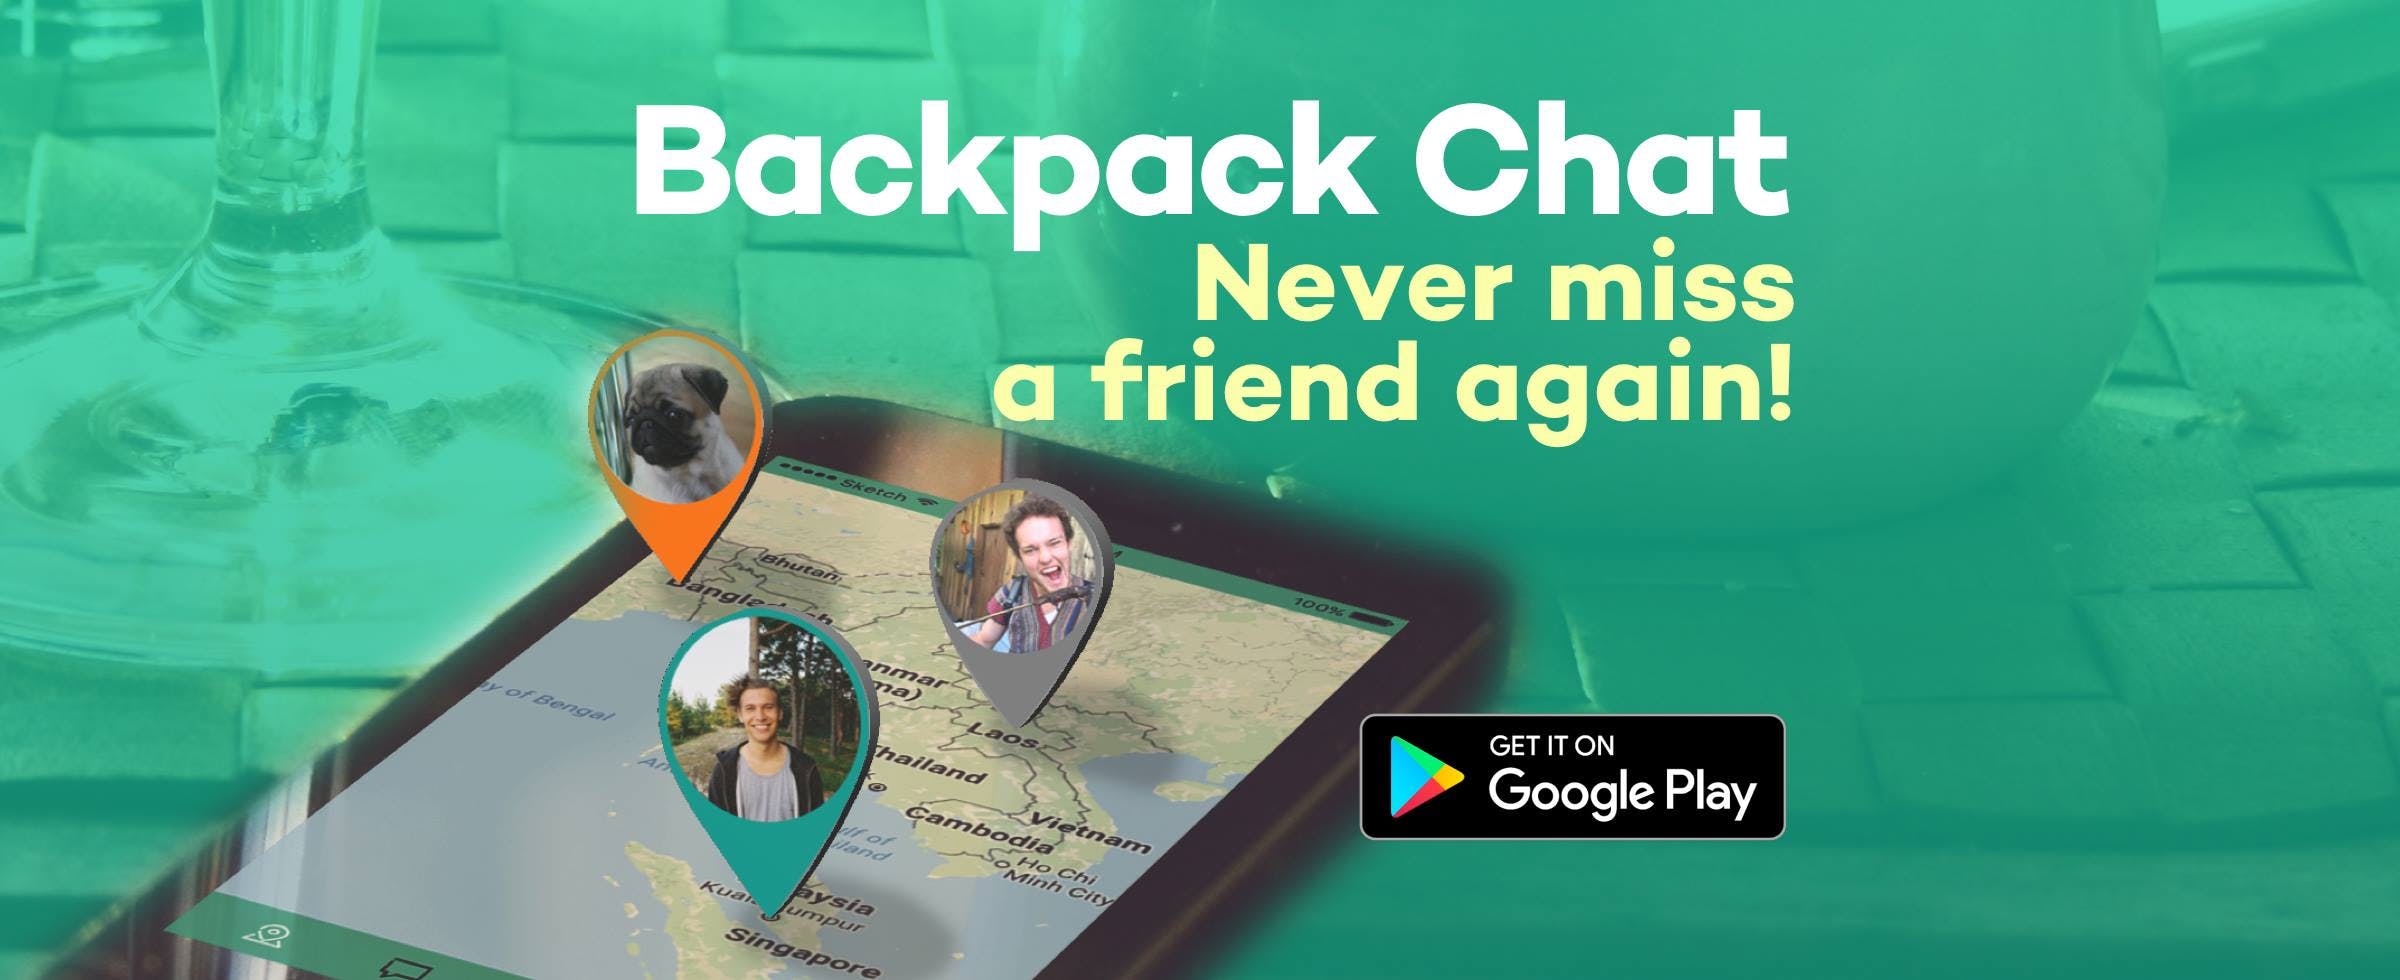 Backpack Chat media 1